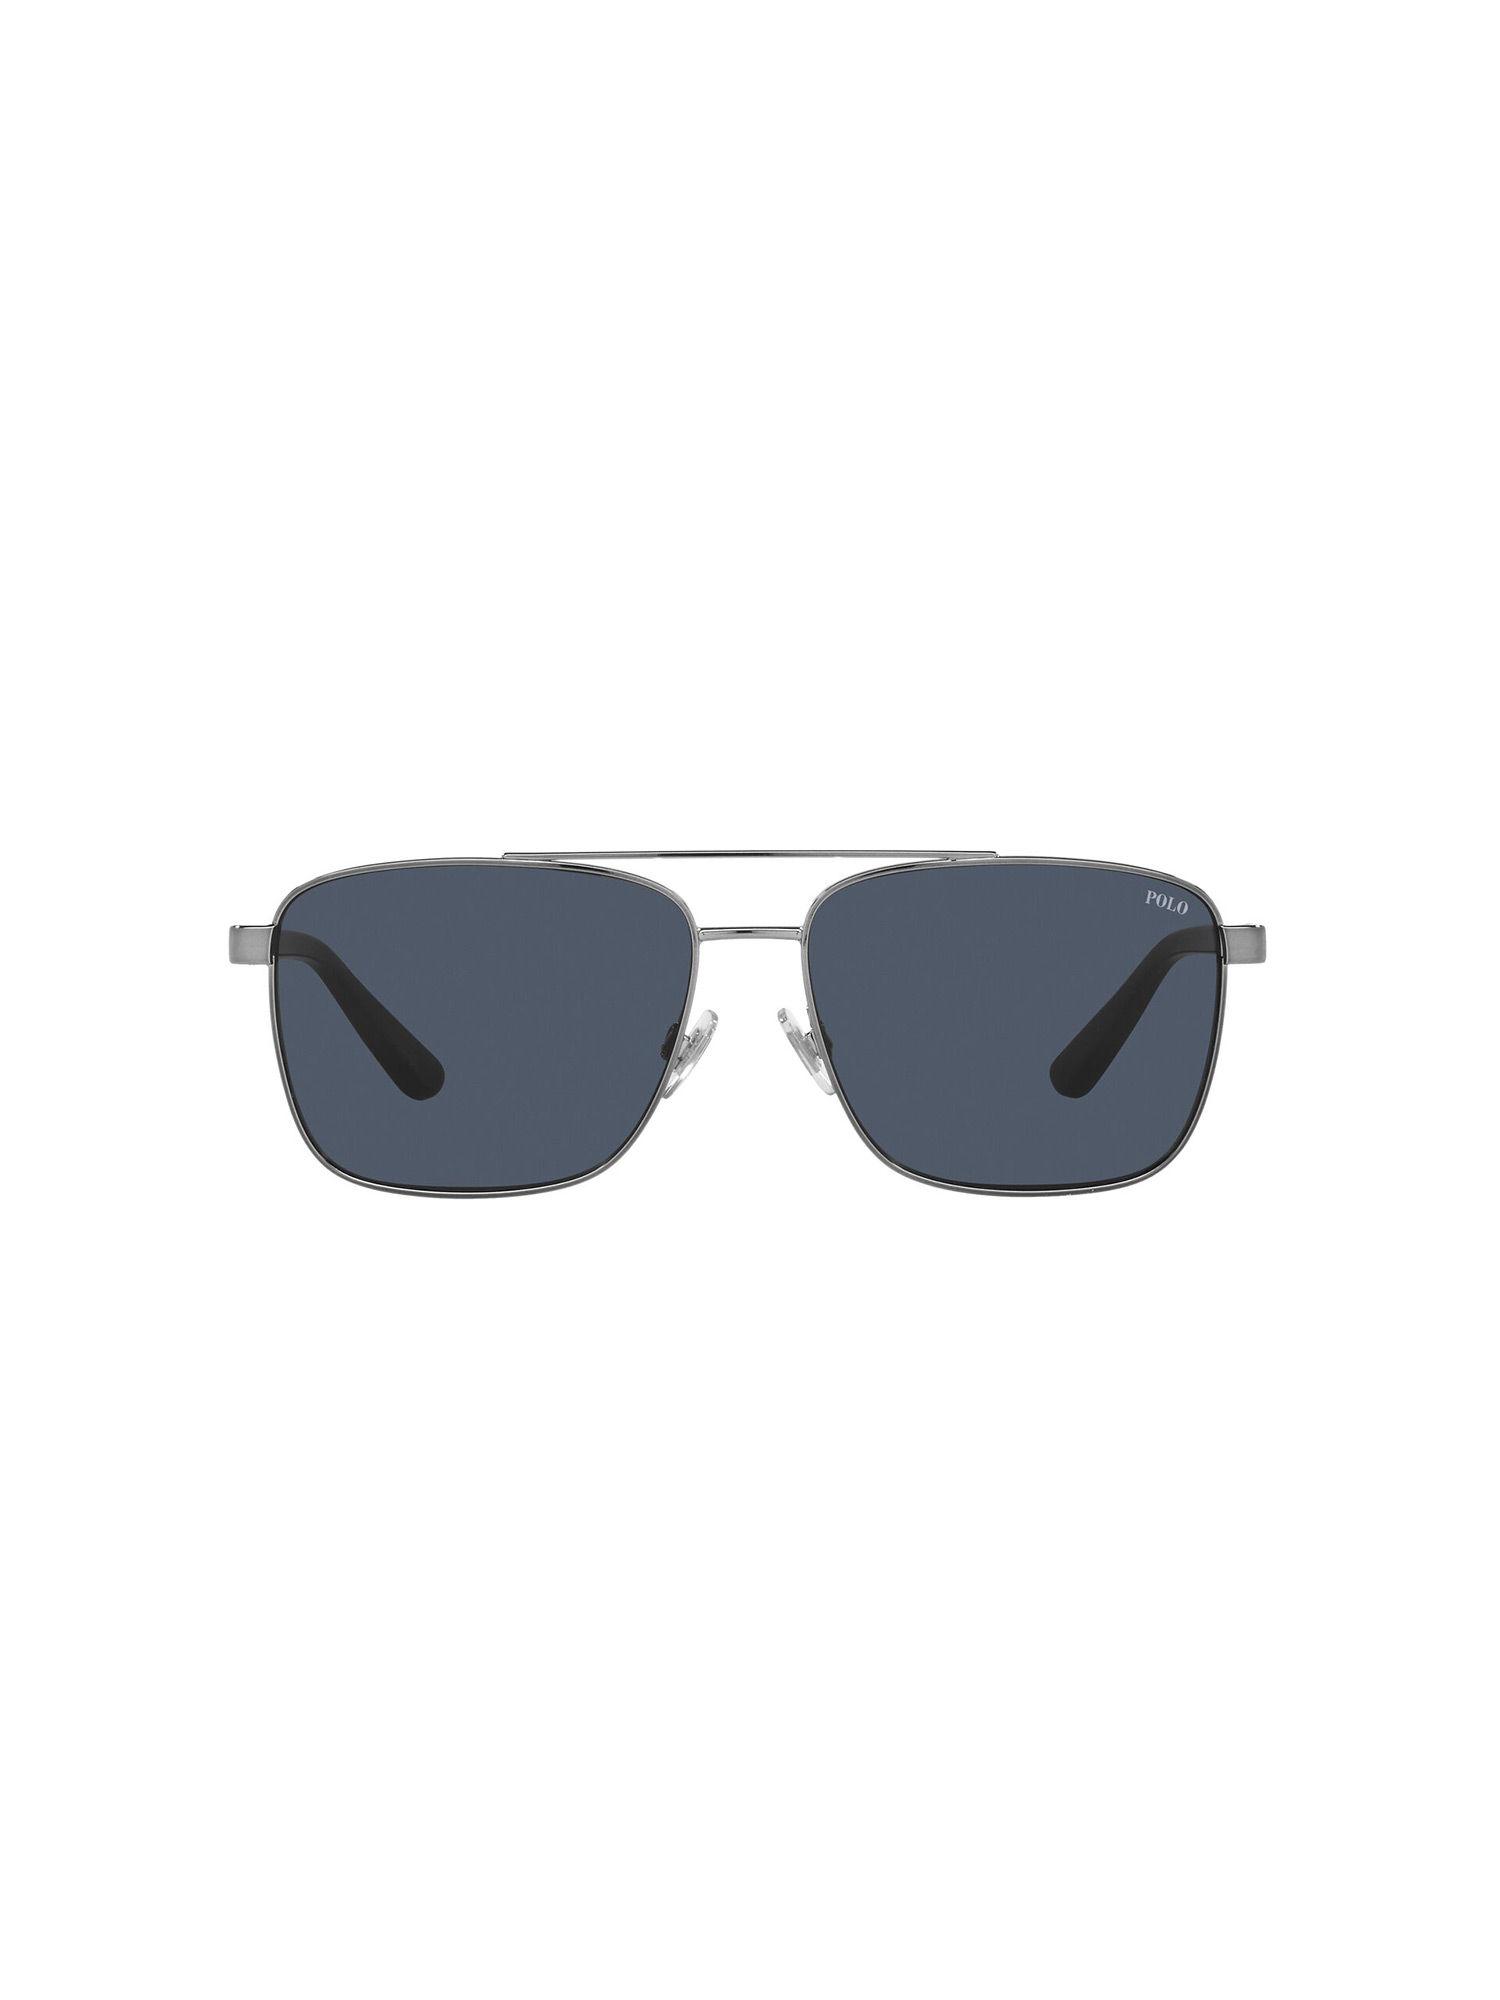 0ph3137 polo thin blocking grey blue lens pillow male sunglasses